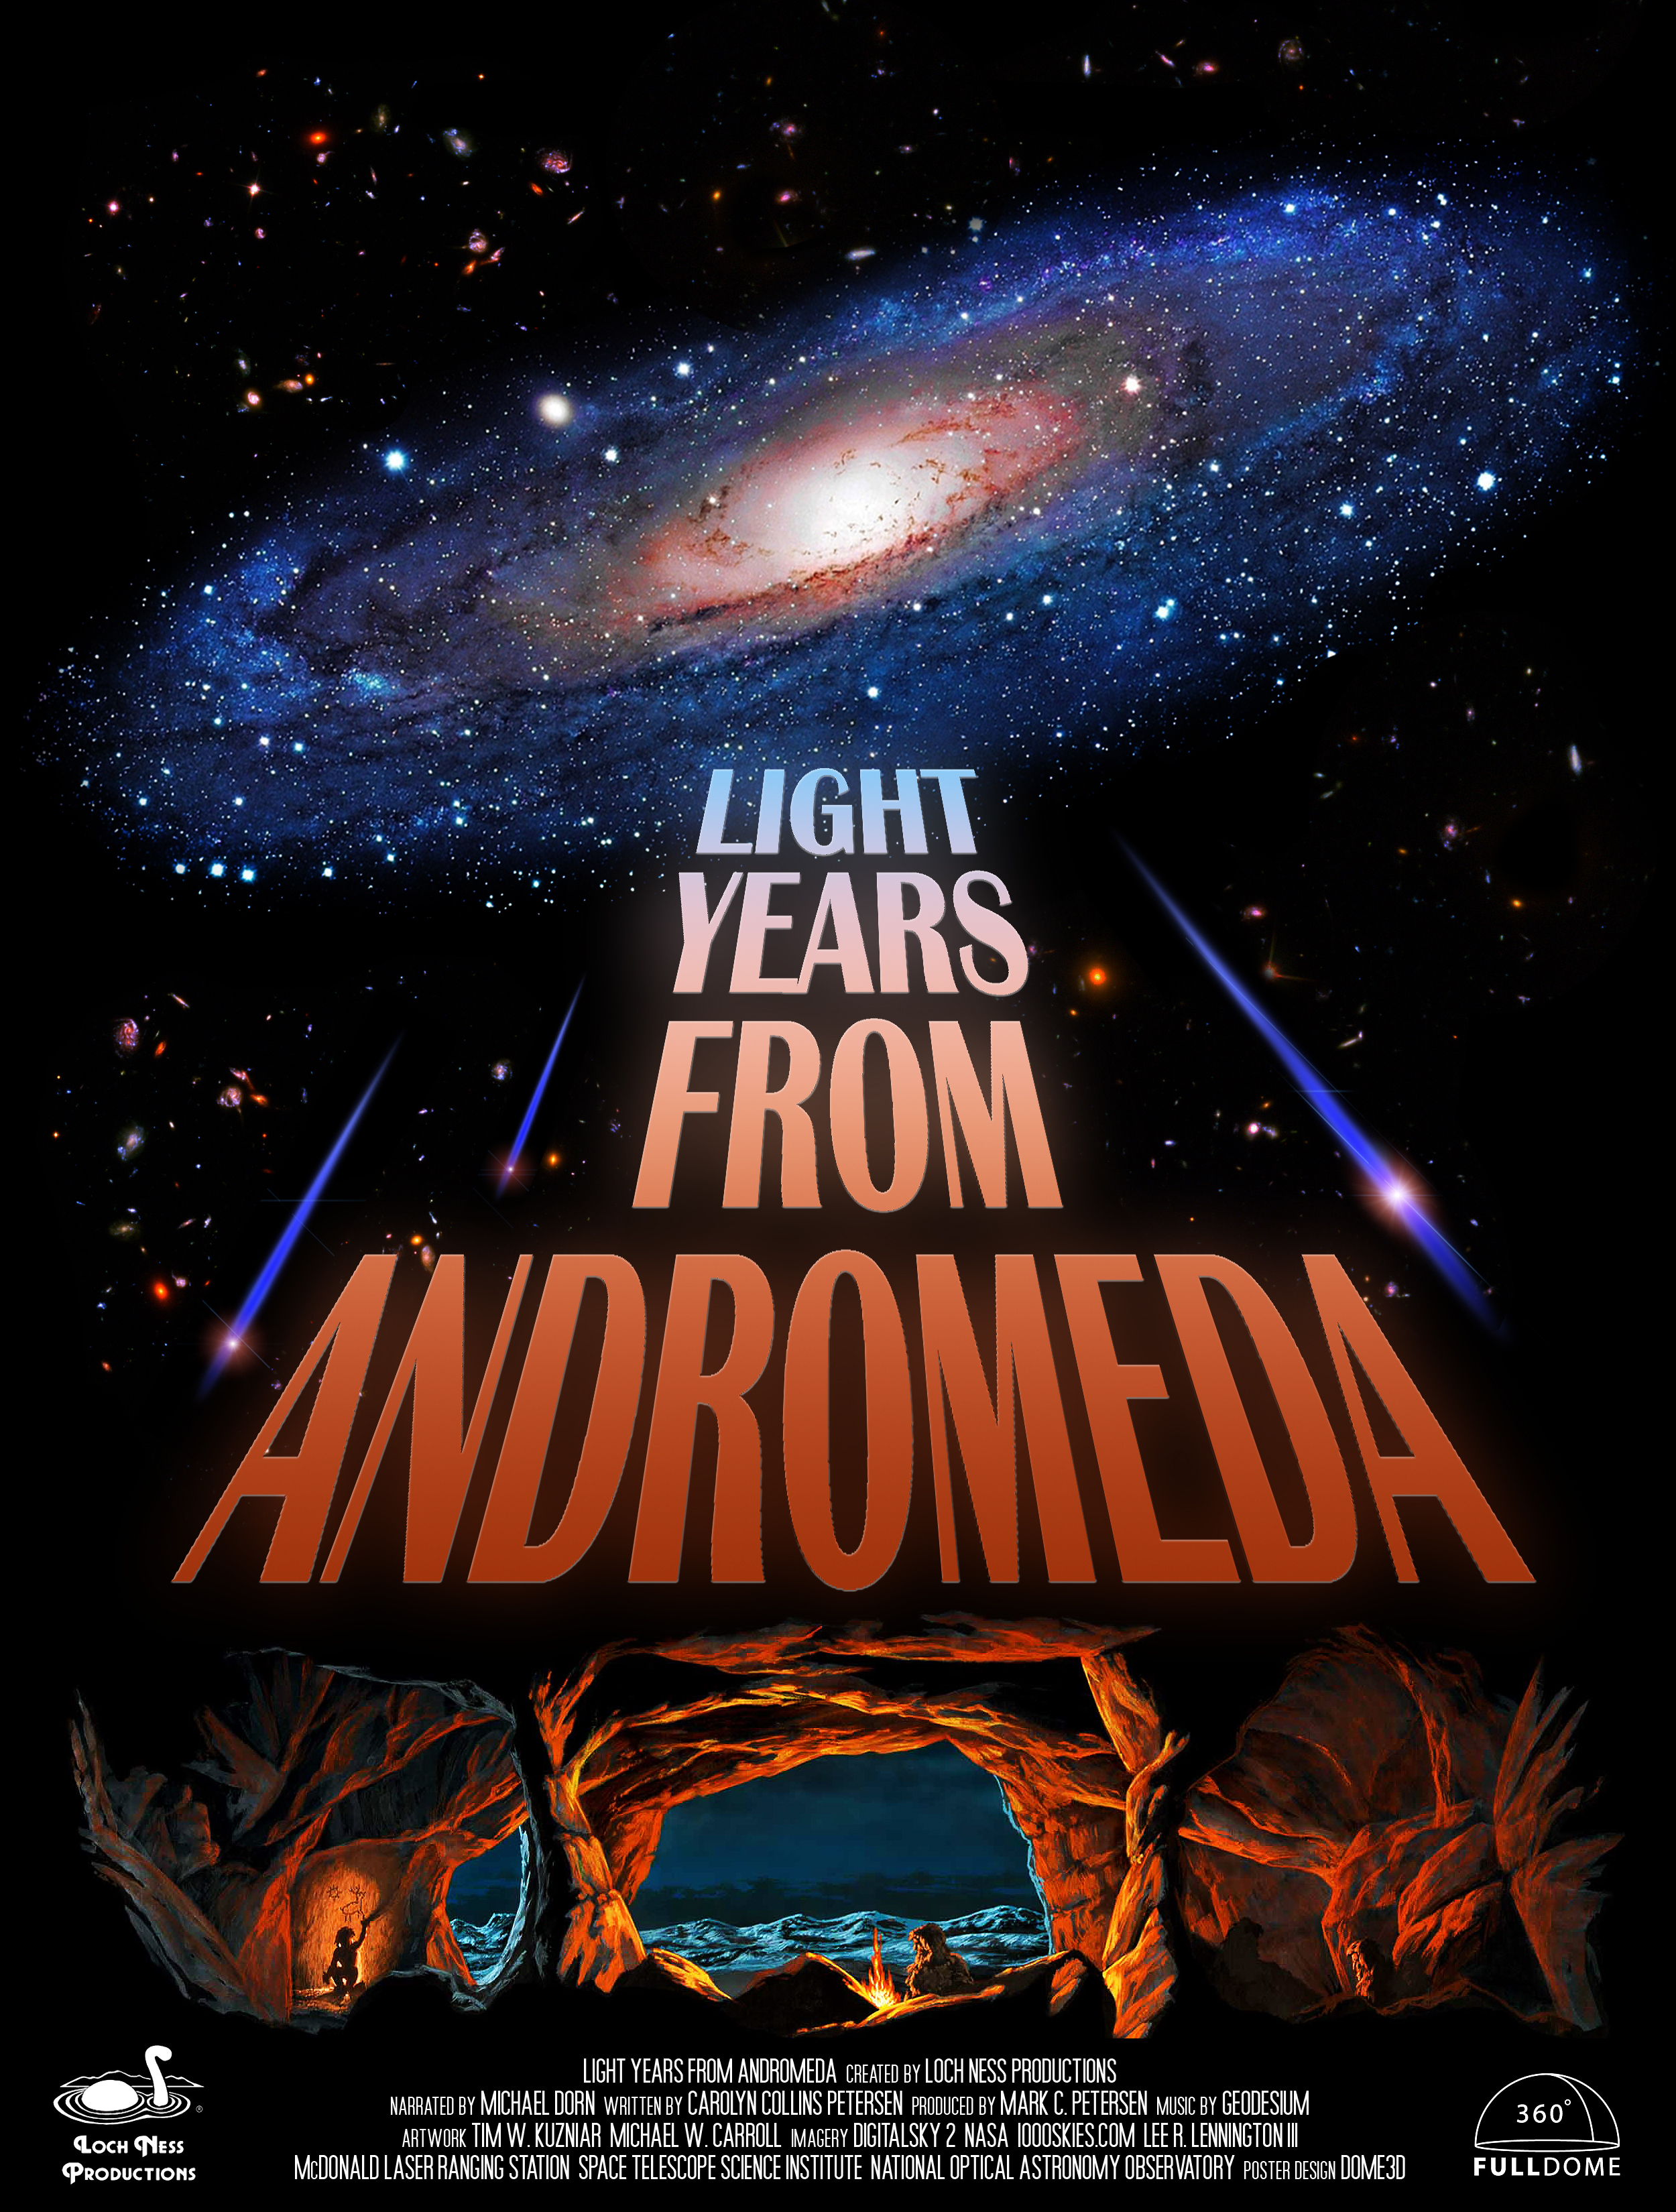 andromeda galaxy civilizations